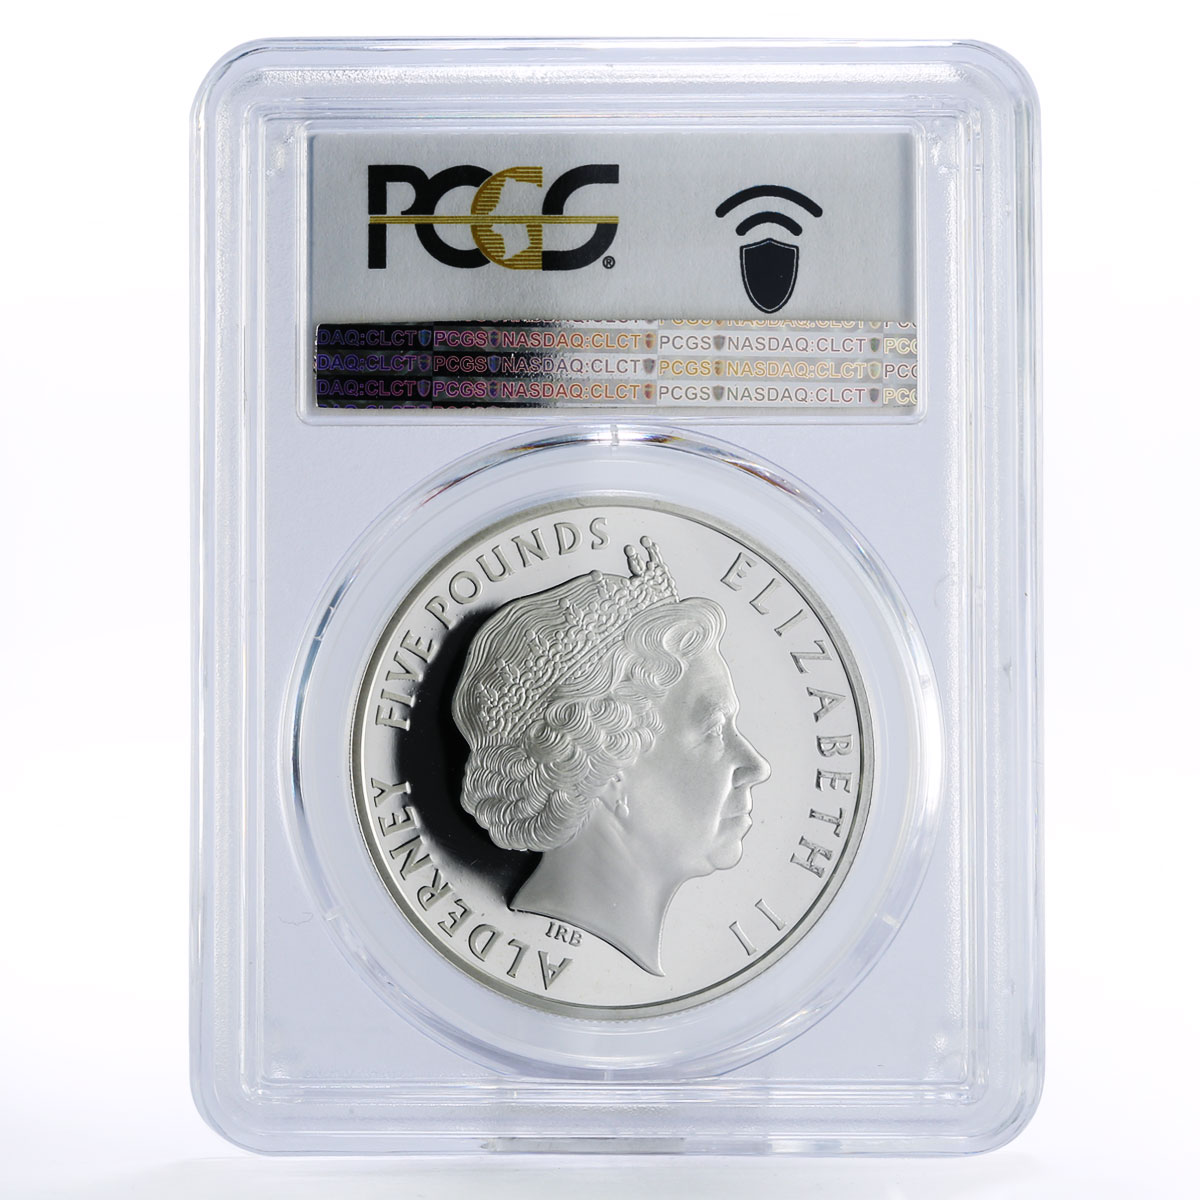 Alderney 5 pounds Centennial of Poet Dylan Thomas PR69 PCGS silver coin 2014